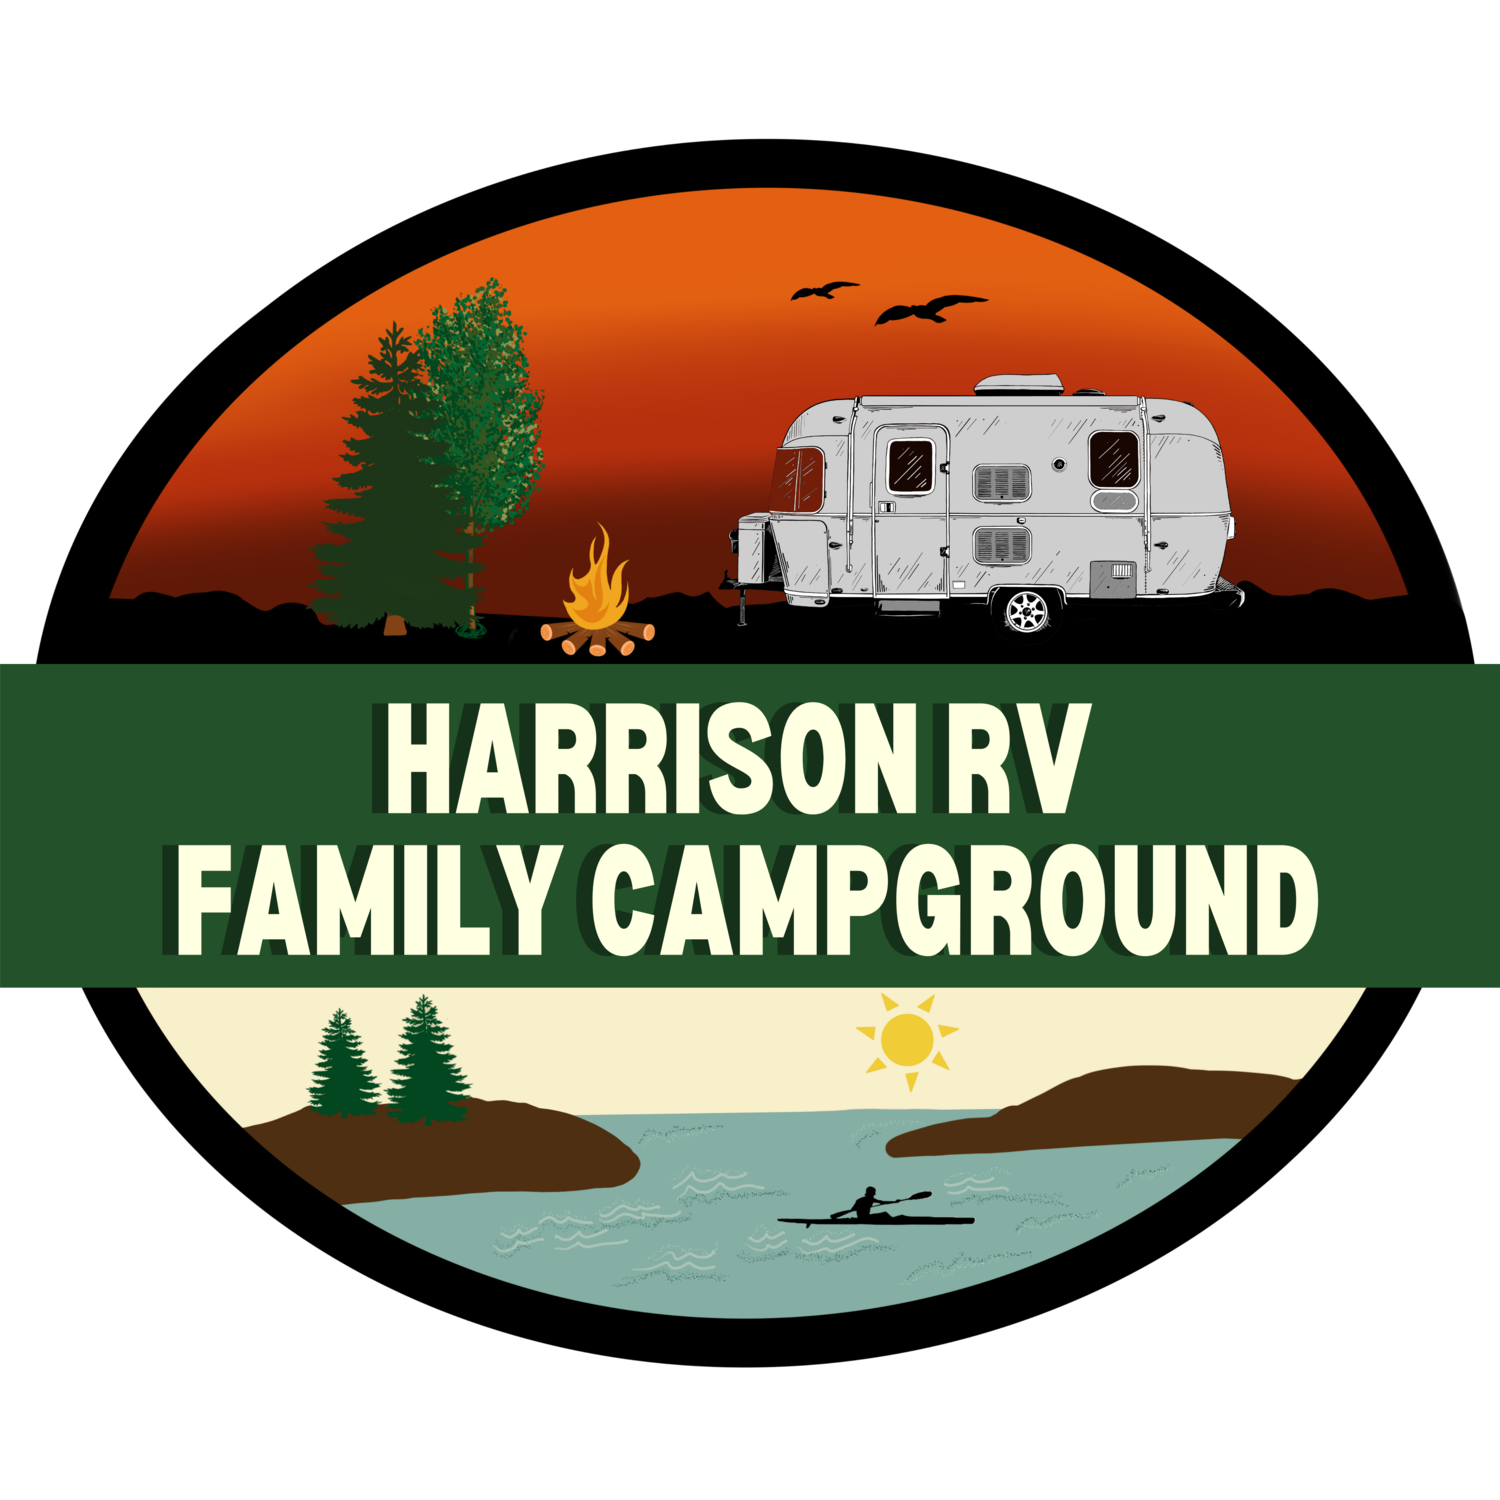 Harrison RV Family Campground